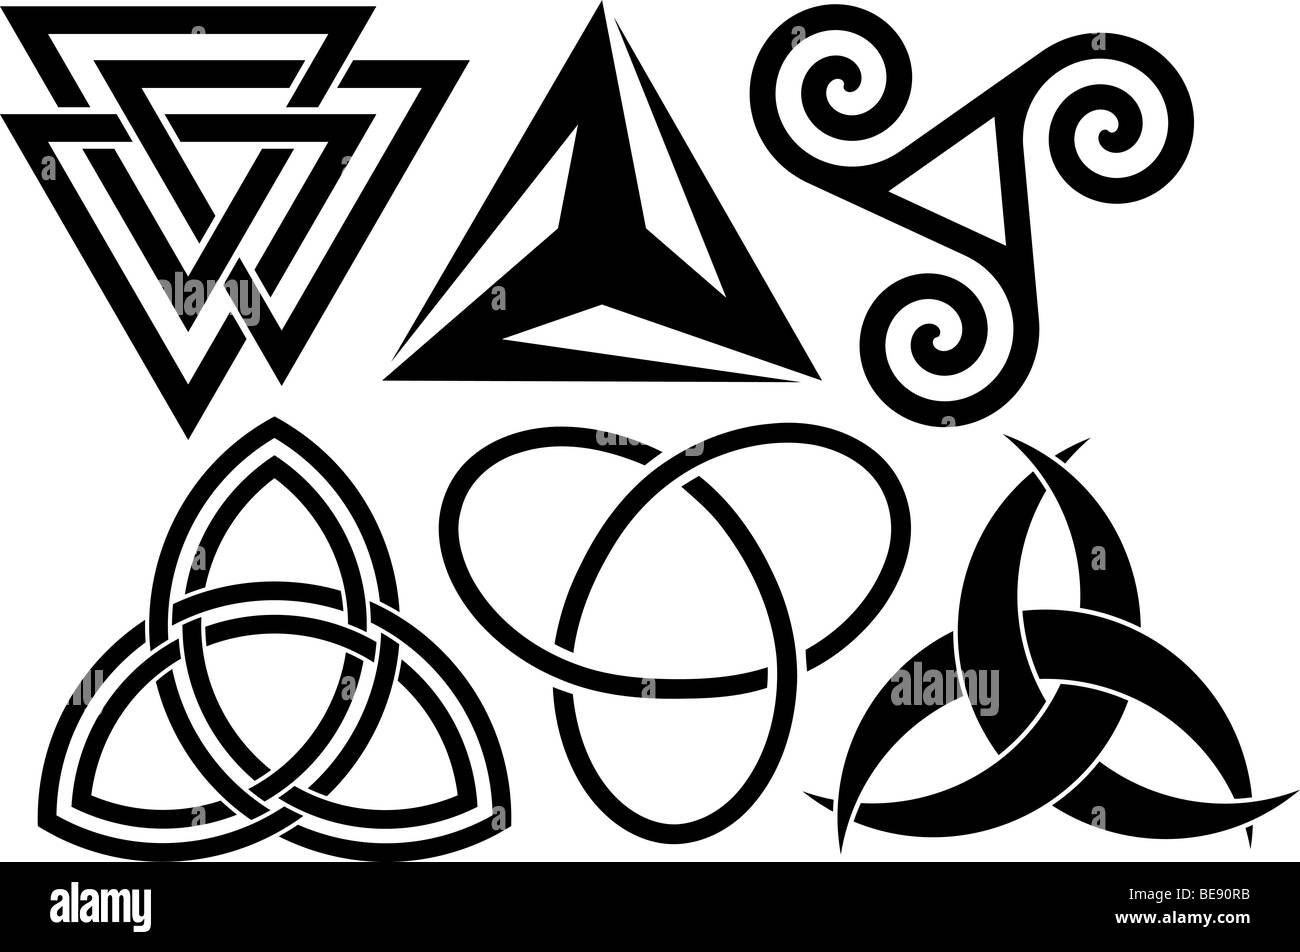 six triangular symbols Stock Photo